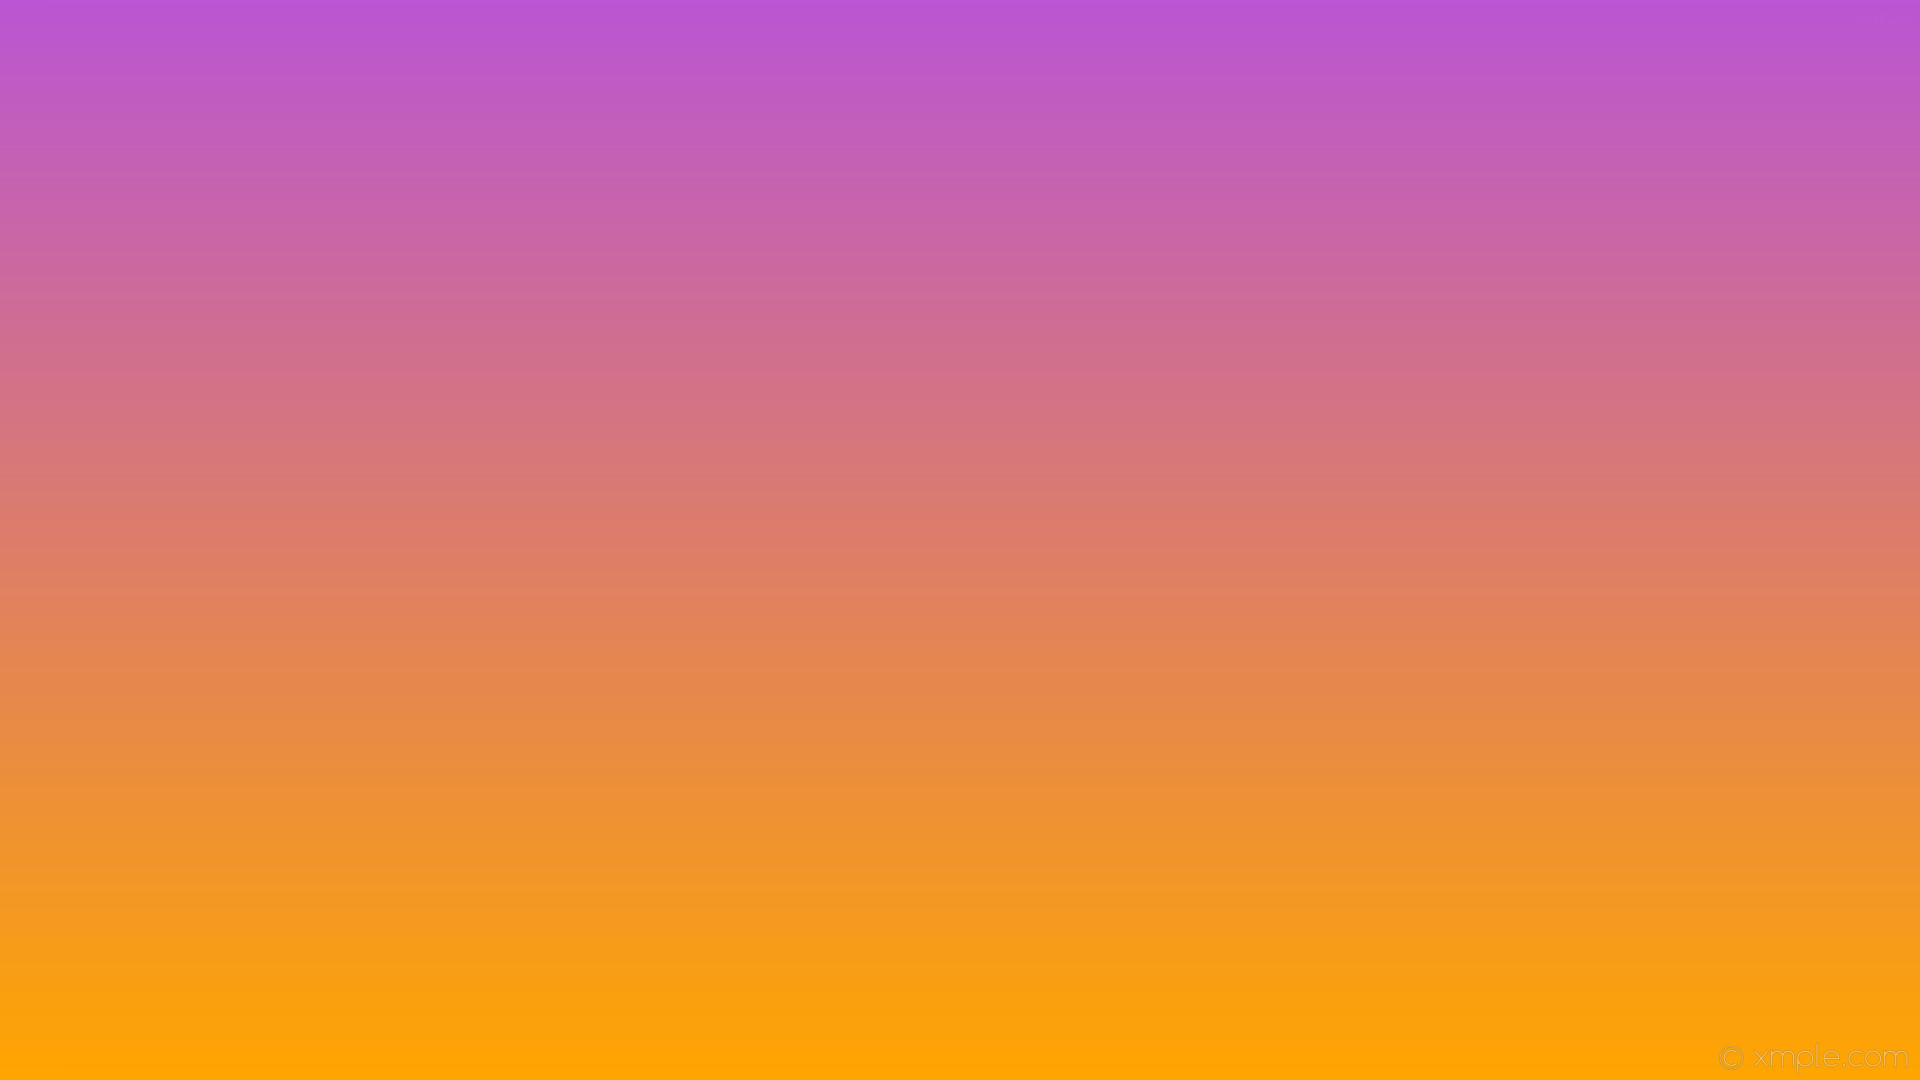 1920x1080 wallpaper orange purple gradient linear medium orchid #ba55d3 #ffa500 90Â°